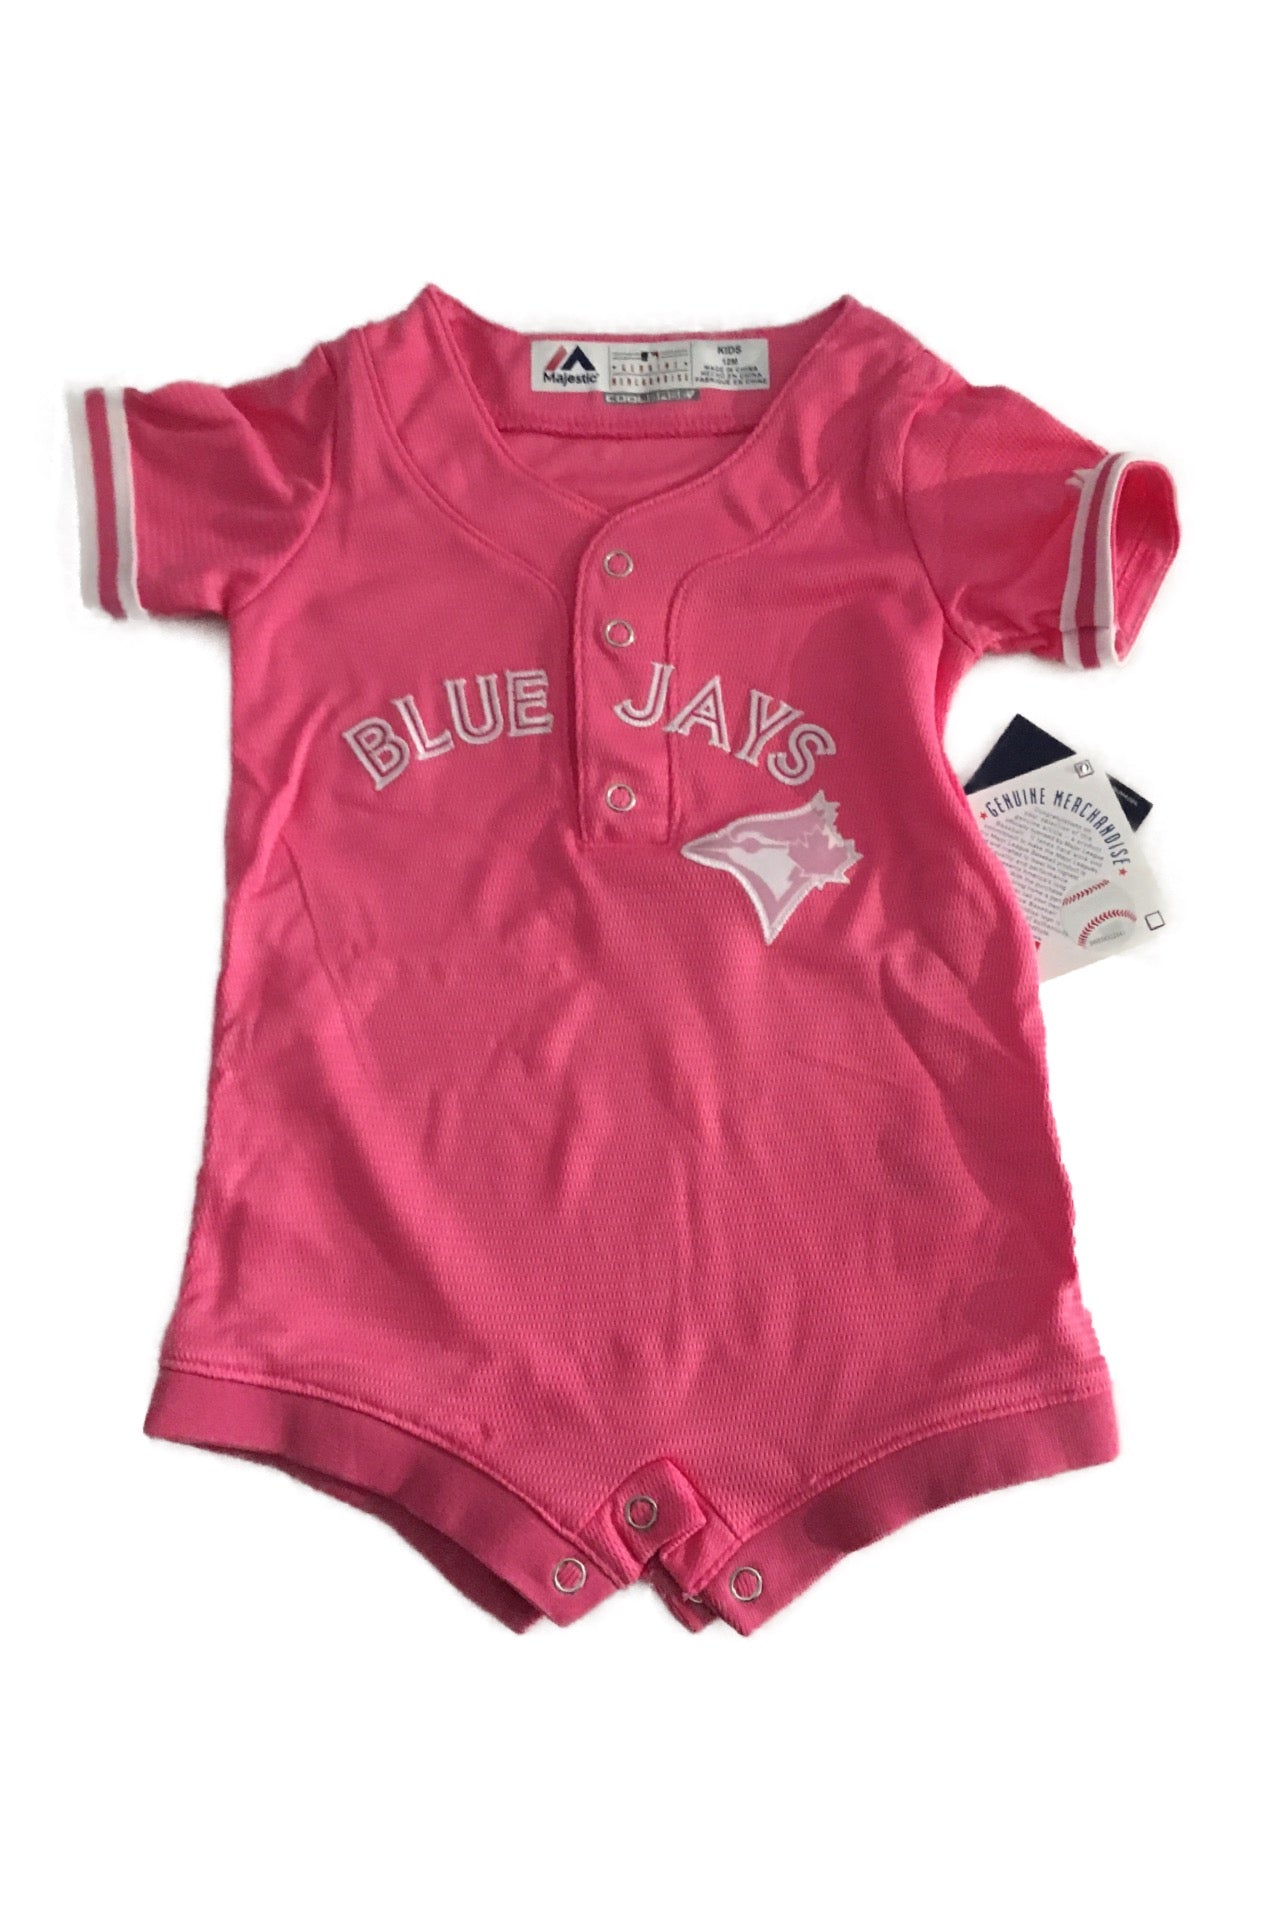 Toronto Blue Jays Infant Kids Child Large Age 6x/7 Jersey Cool Base Blue  Alt MLB